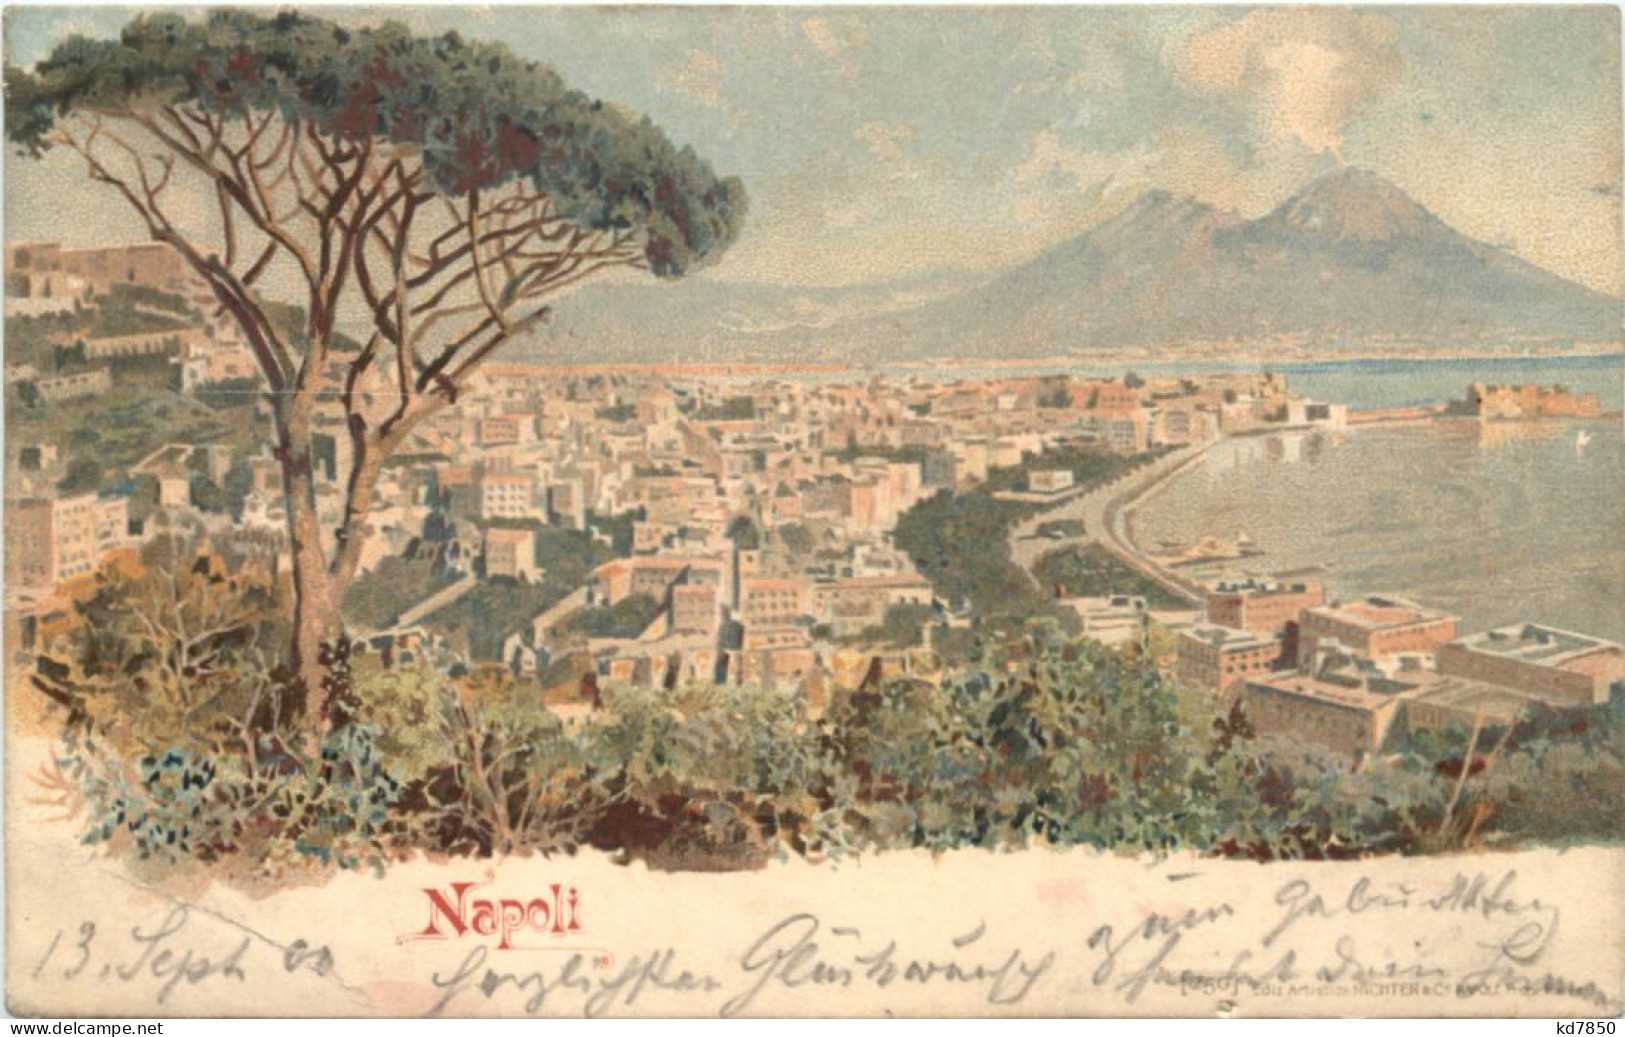 NApoli - Napoli (Naples)